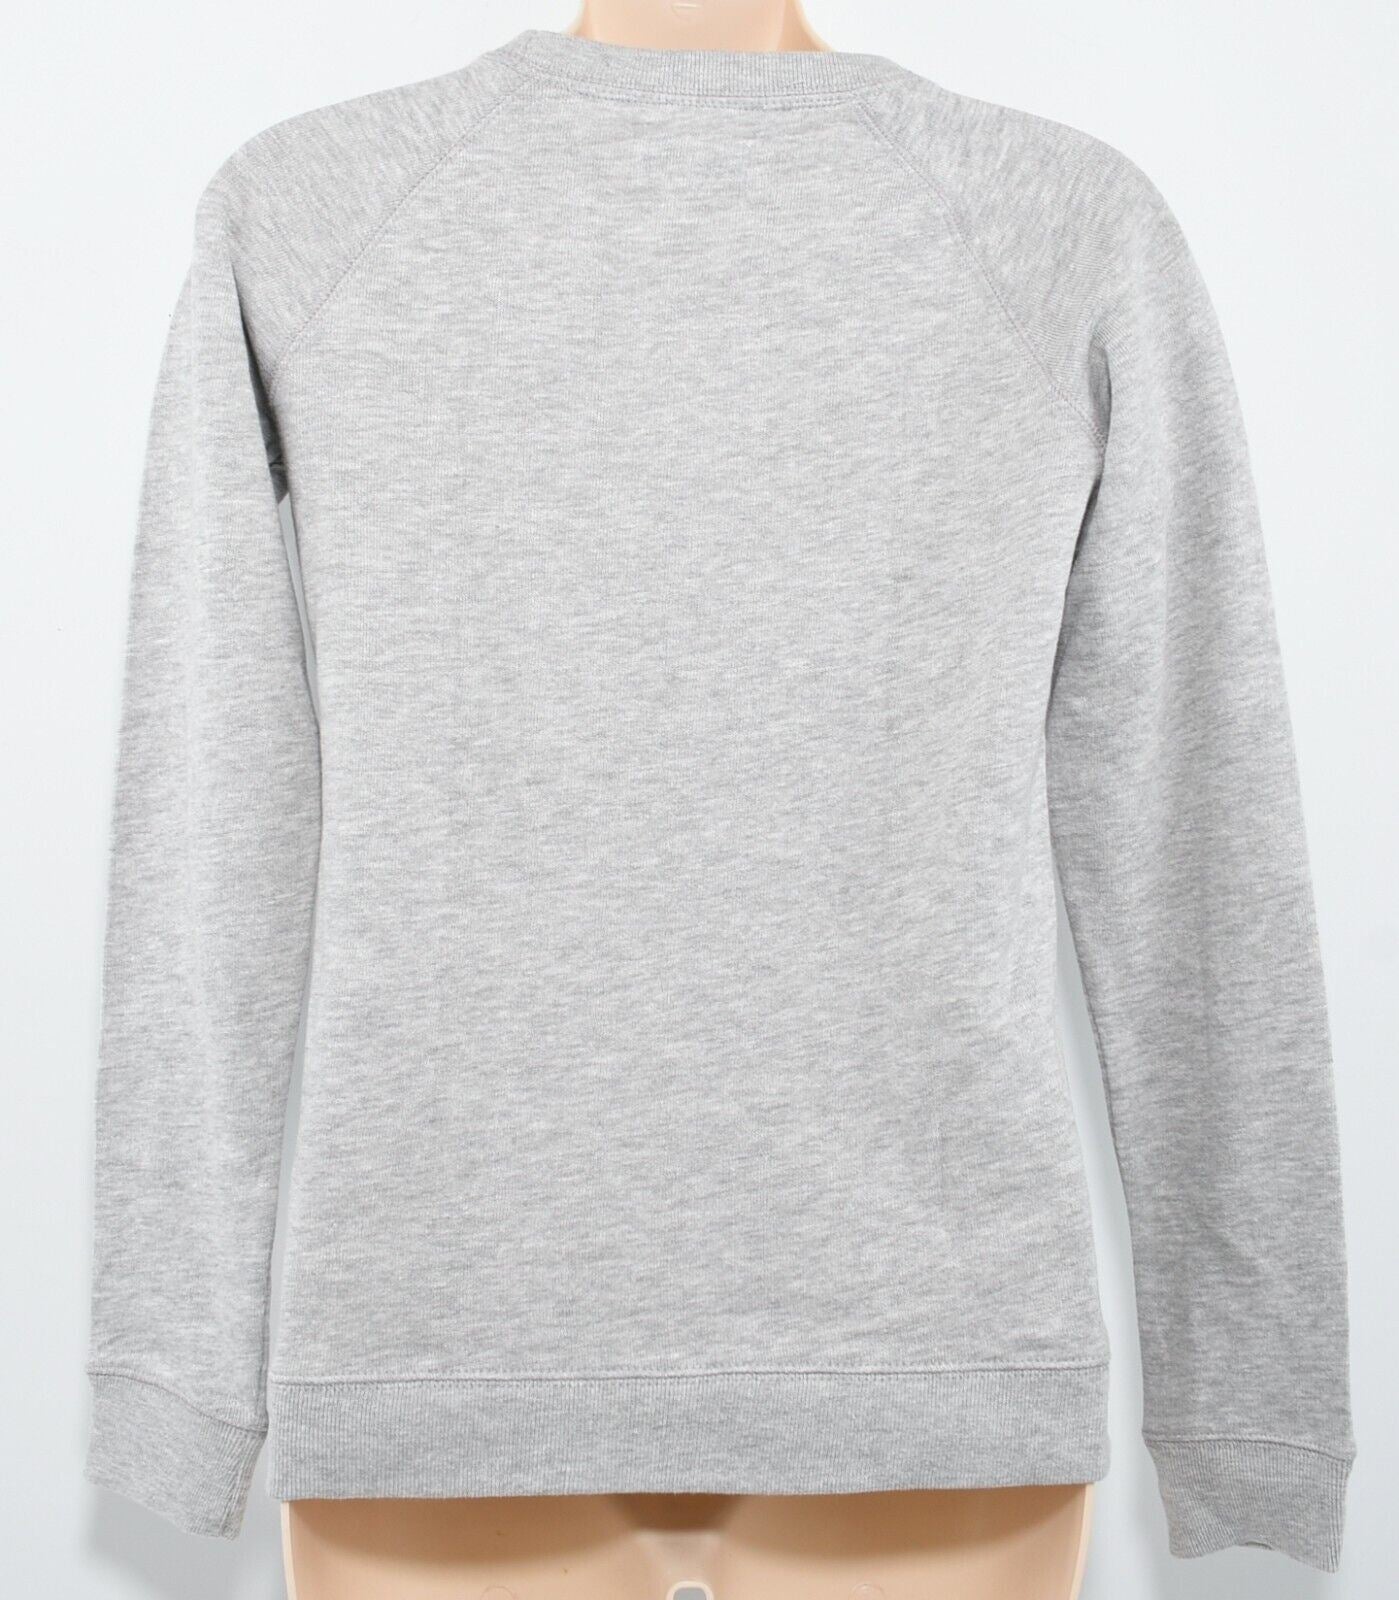 JACK WILLS Womens COLBY Sweatshirt, Grey Marl, size 2XS /UK 6